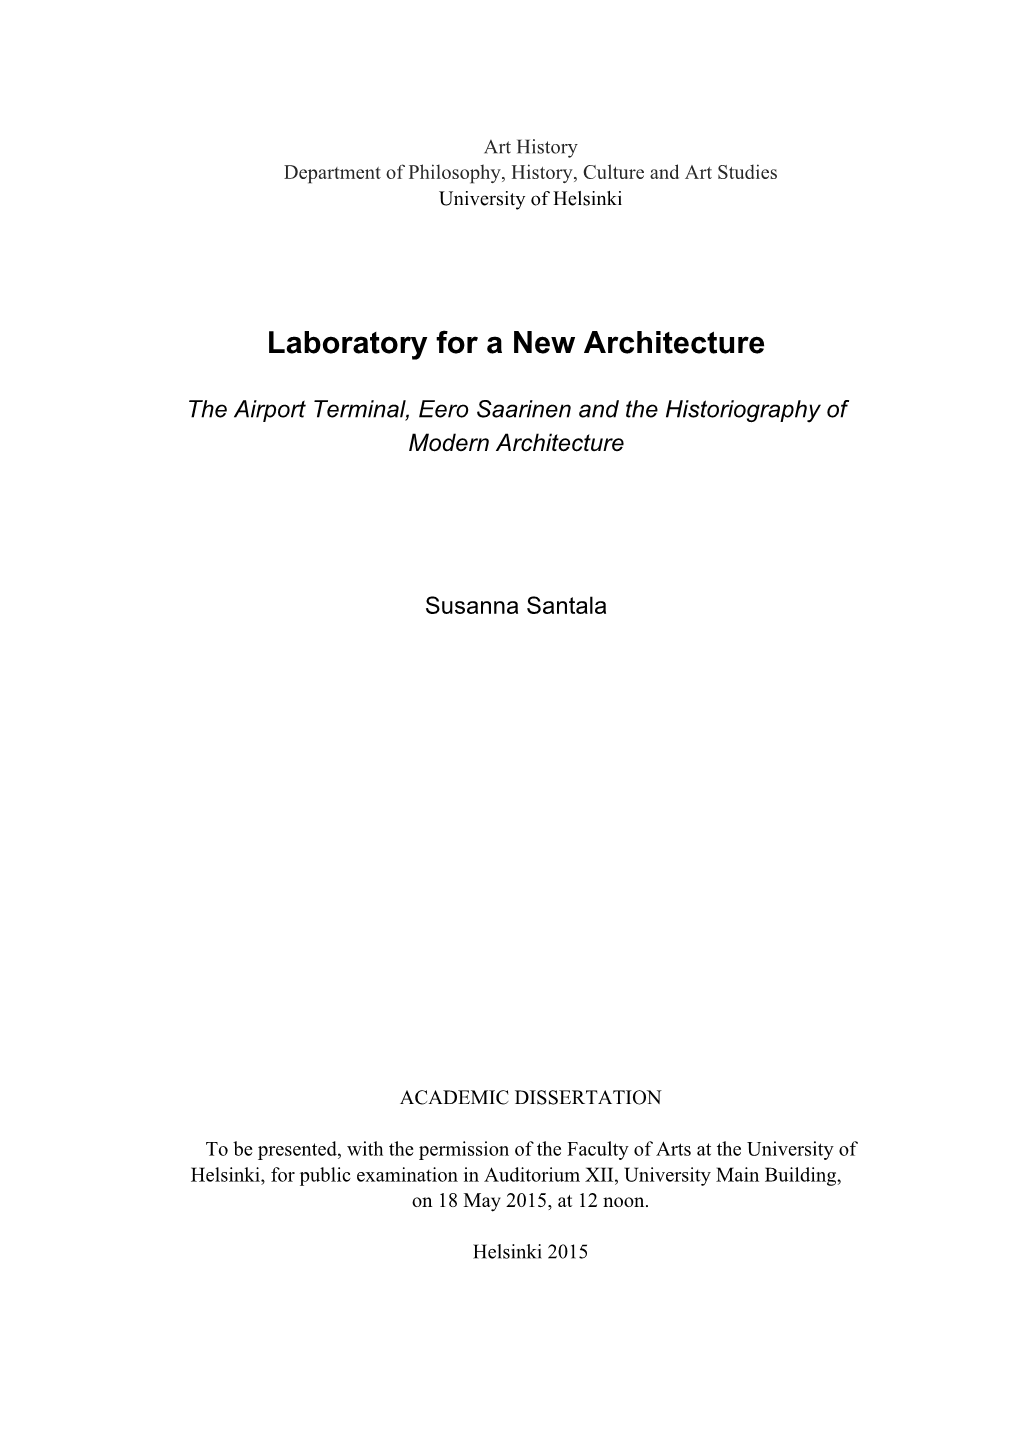 Laboratory for a New Architecture